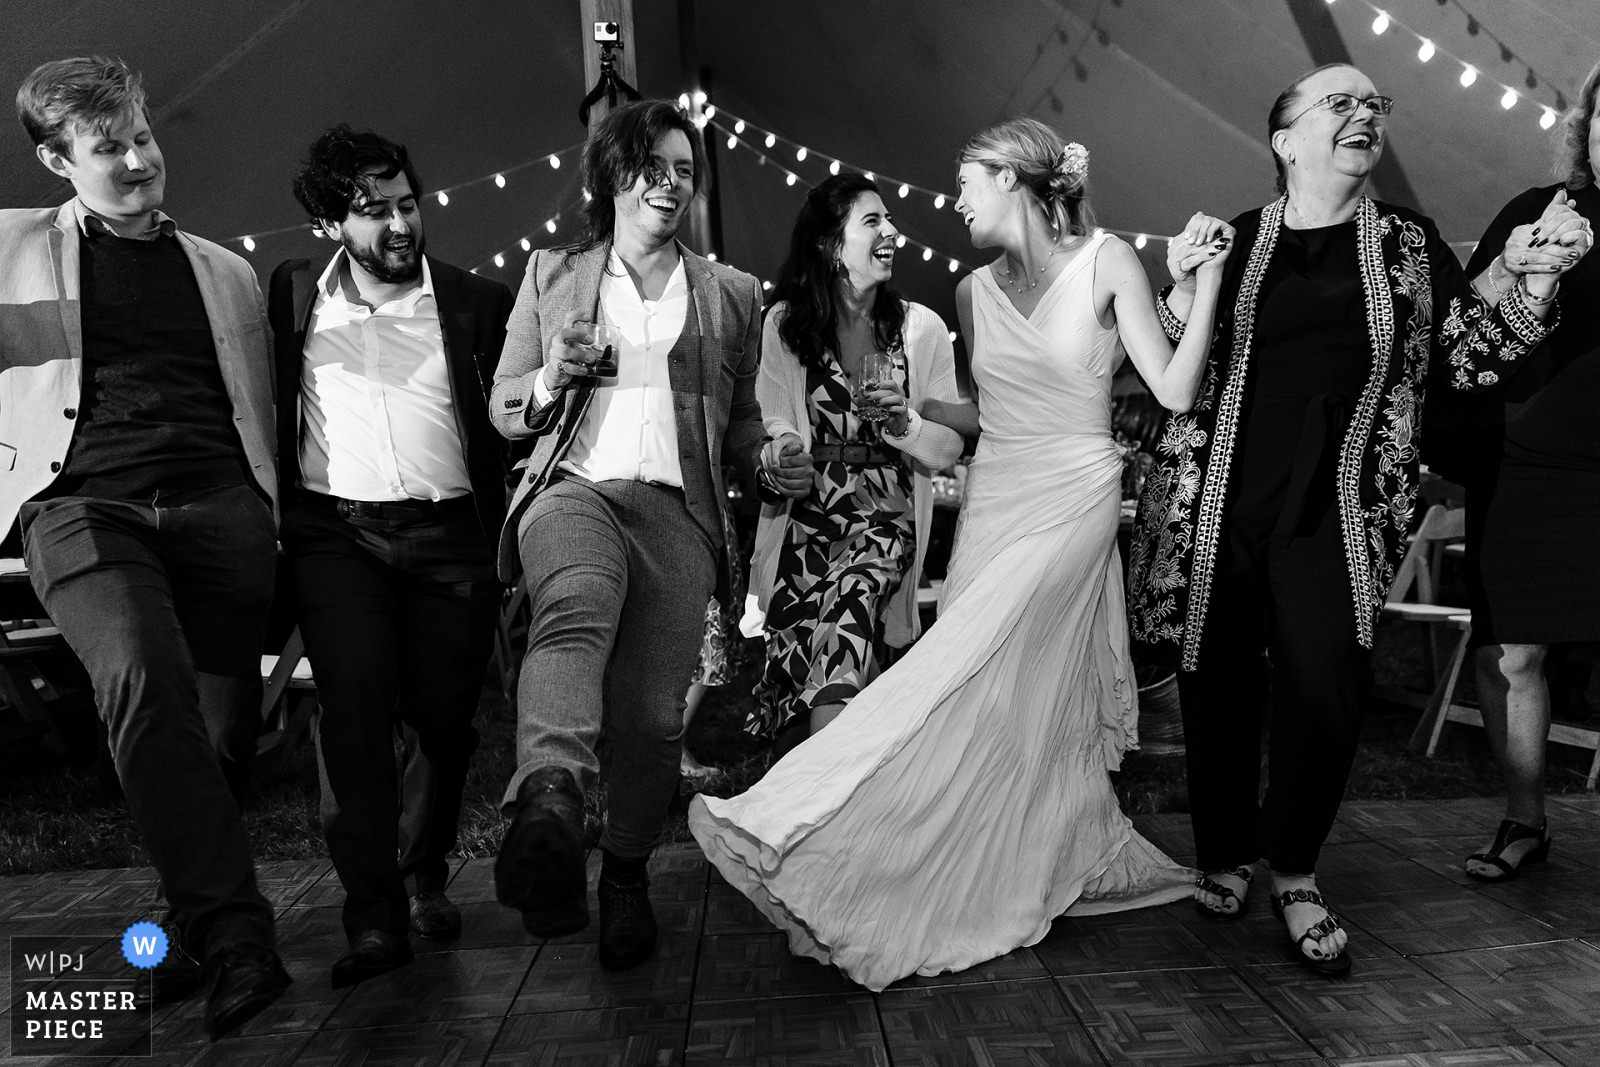 Everyone dances at a Blue Hill Maine wedding